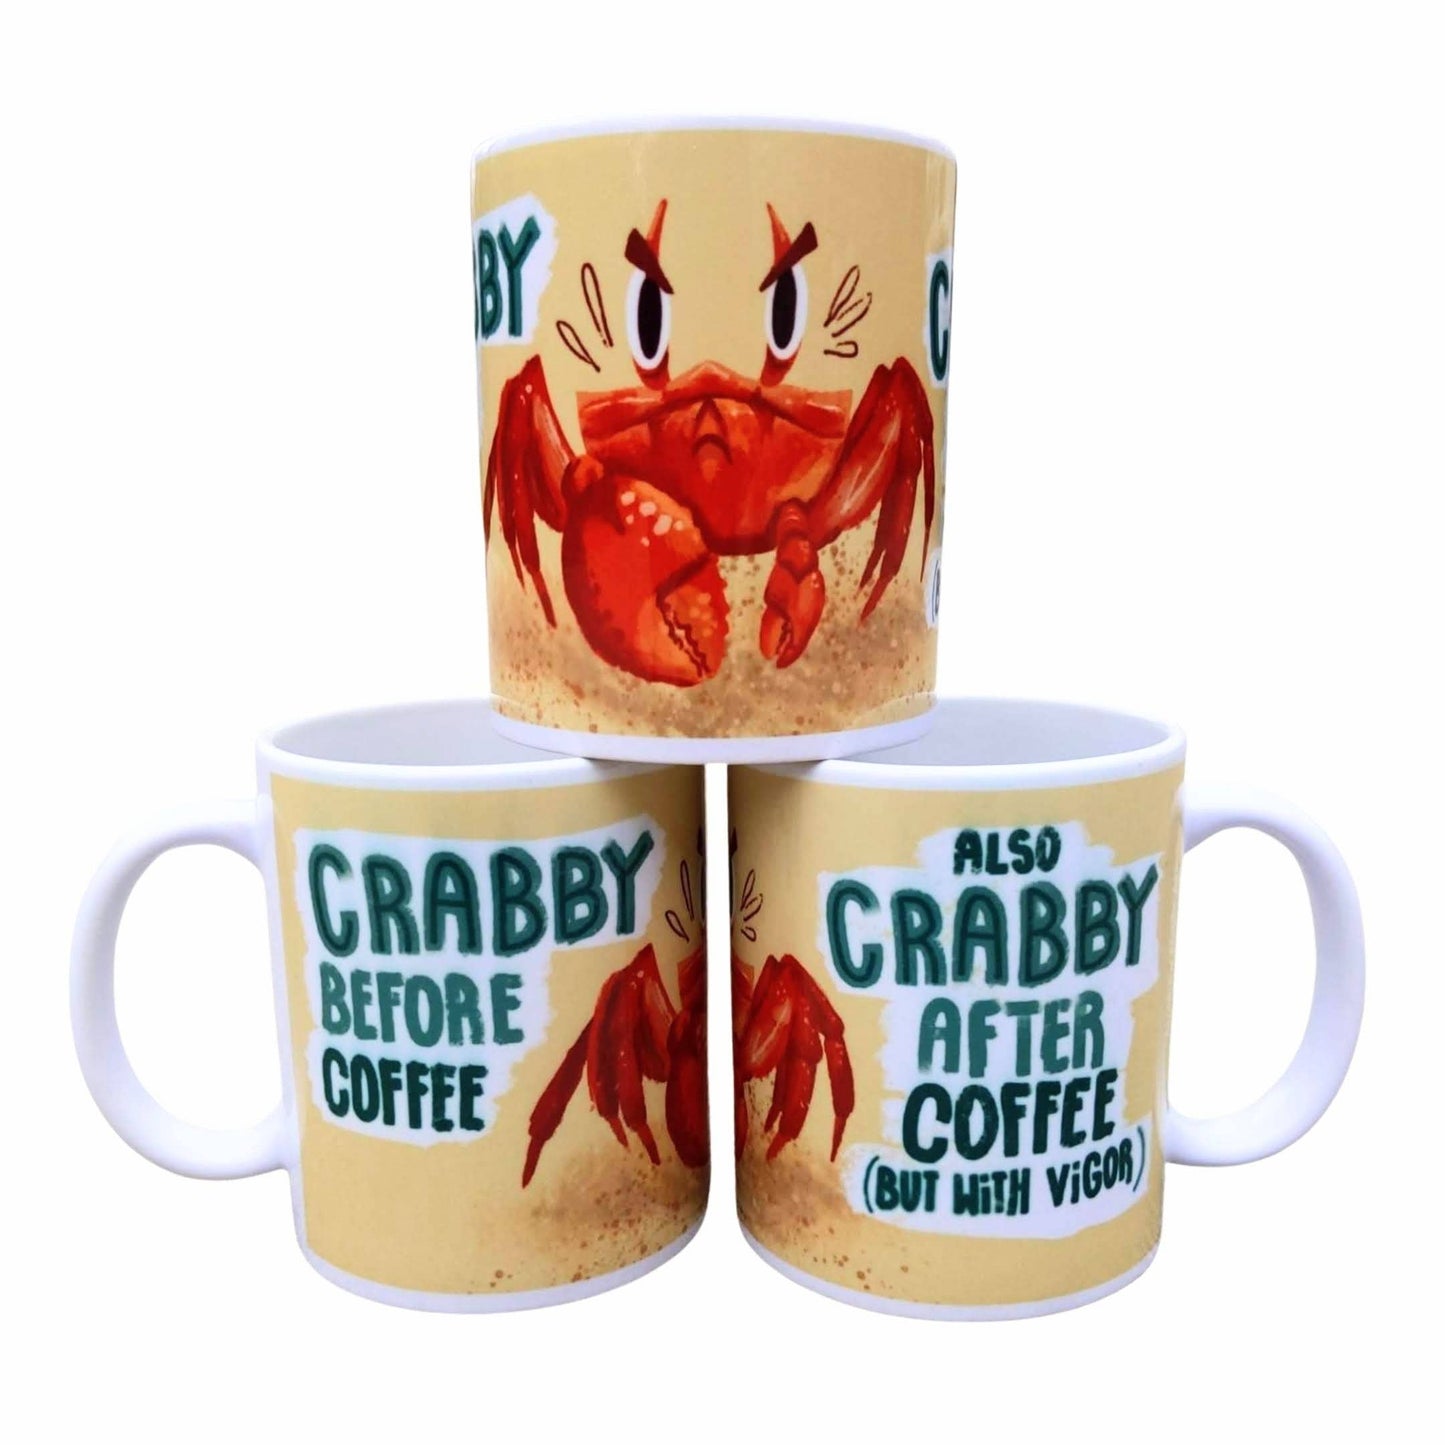 Also Crabby After Coffee, But With Vigor 12oz Coffee Mug